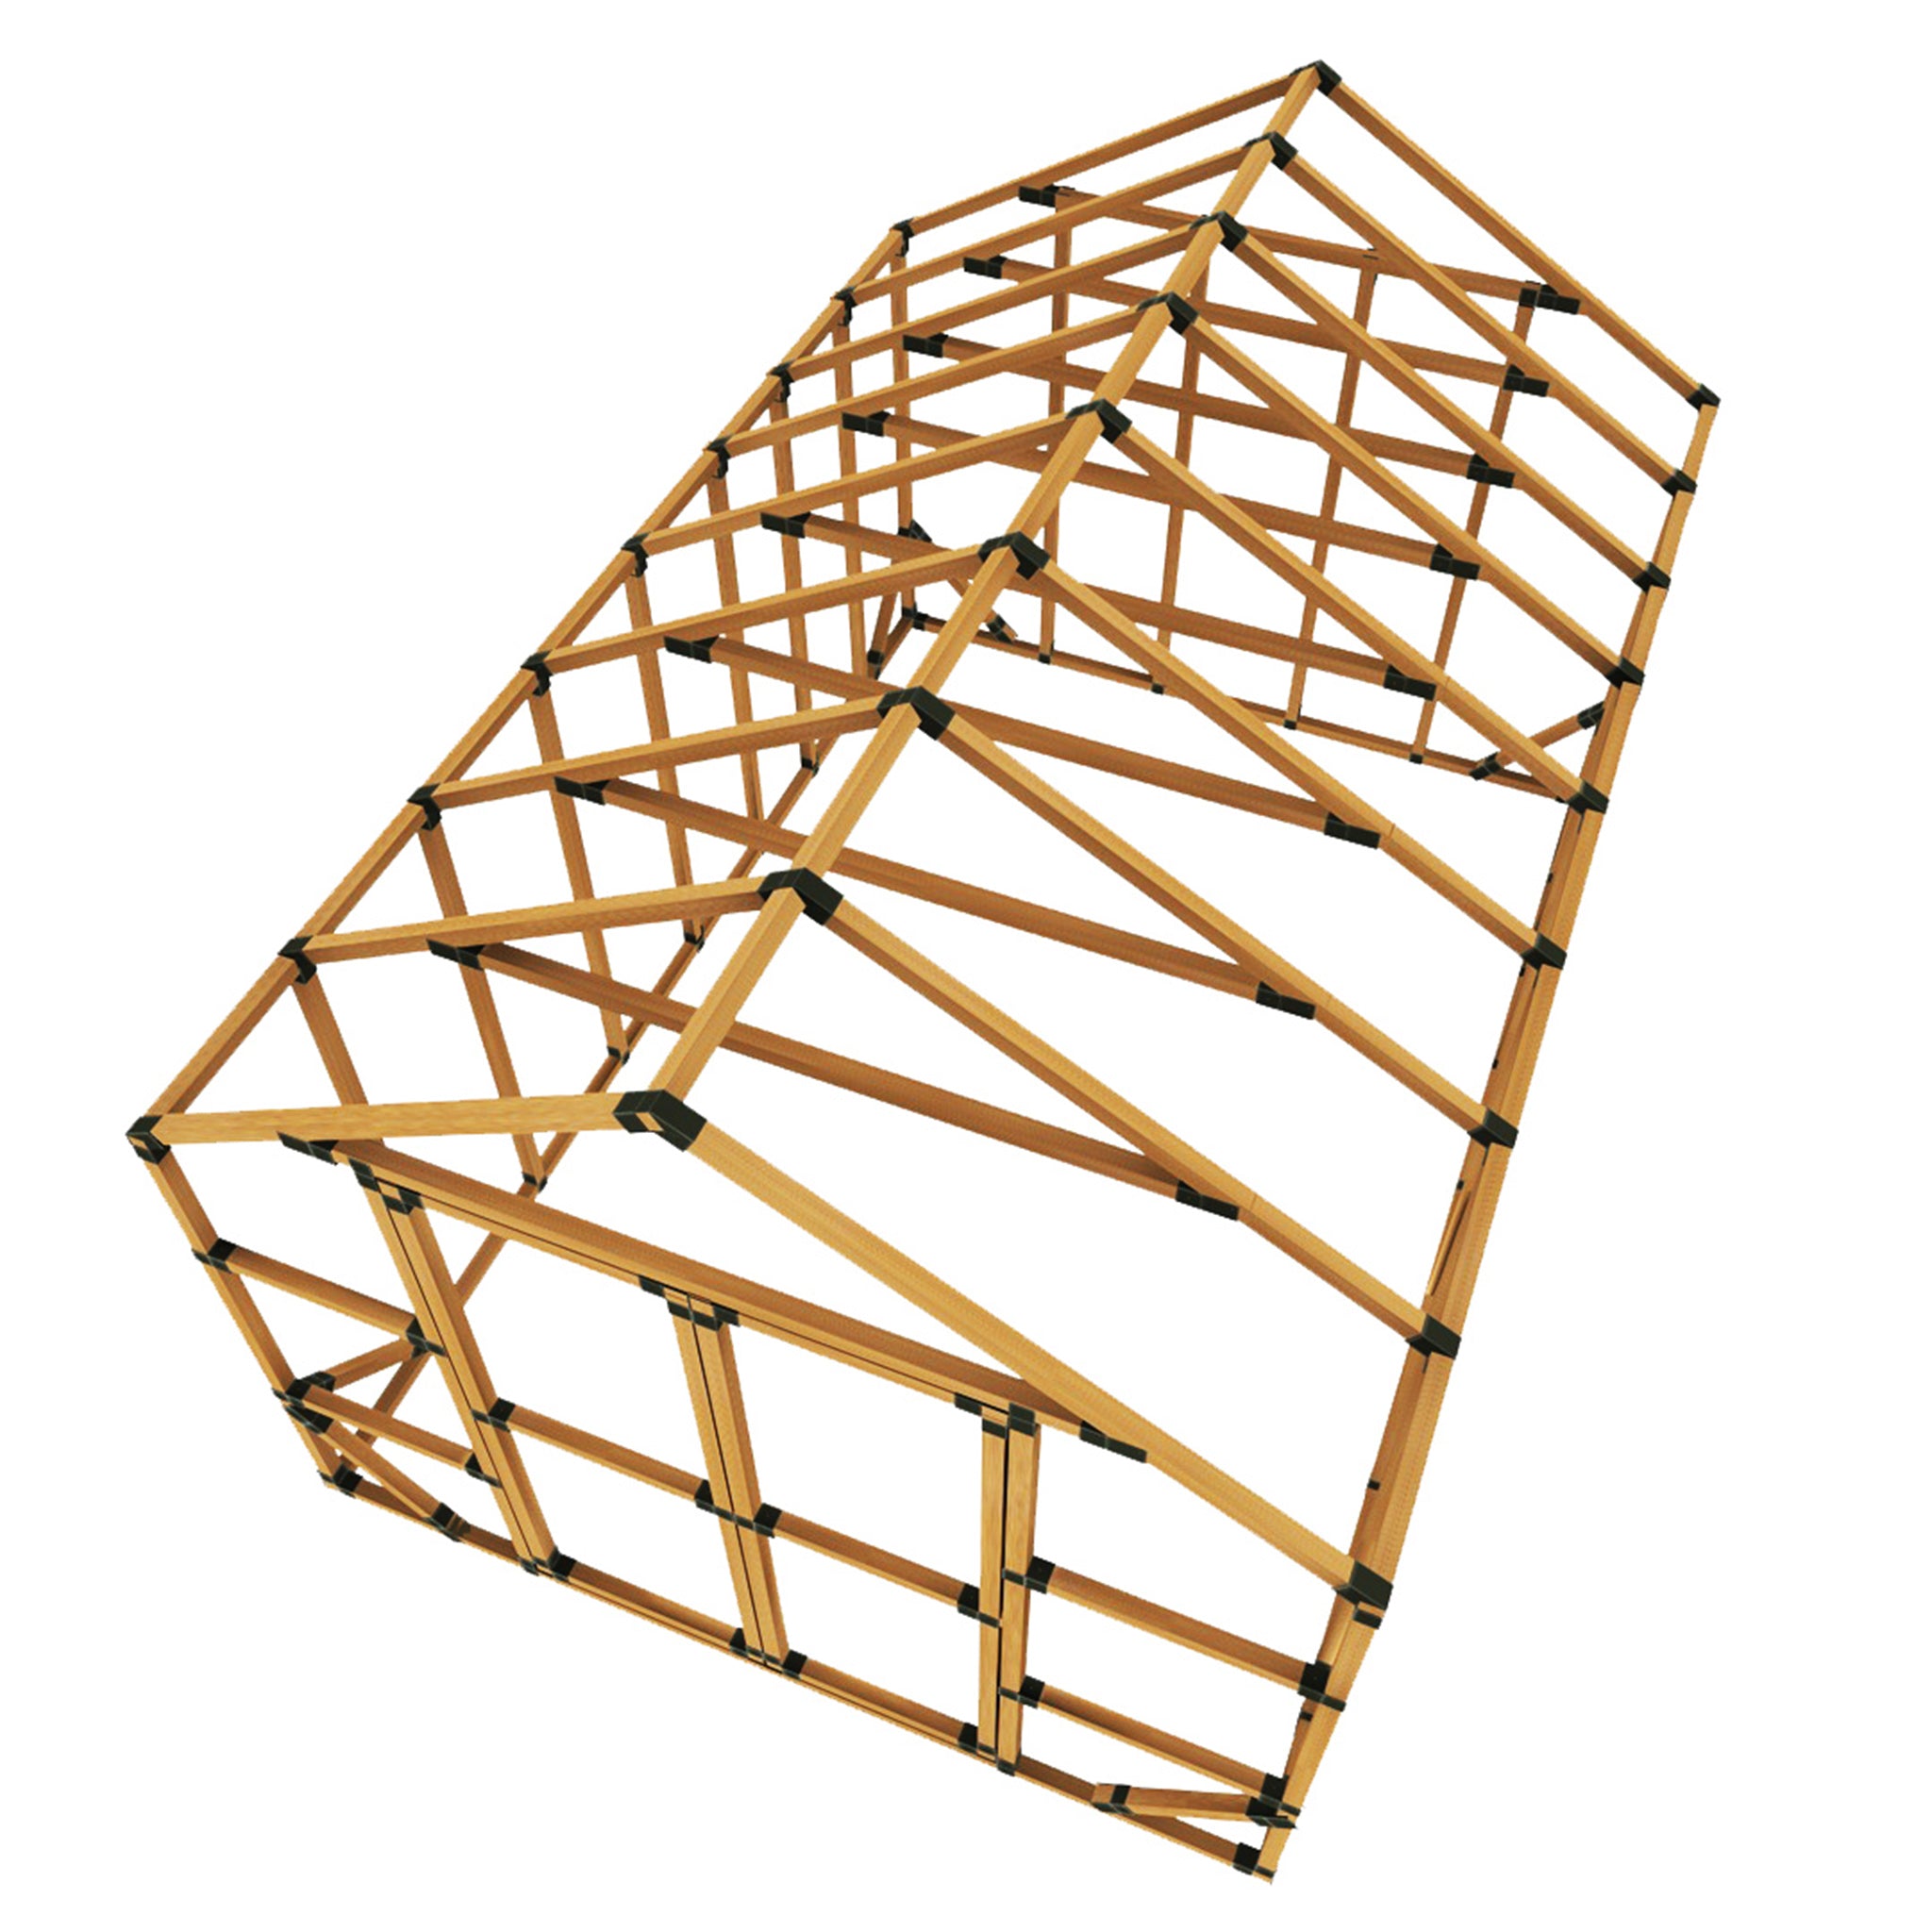 10X20 Standard Storage Shed Kit - E-Z Frame Structures